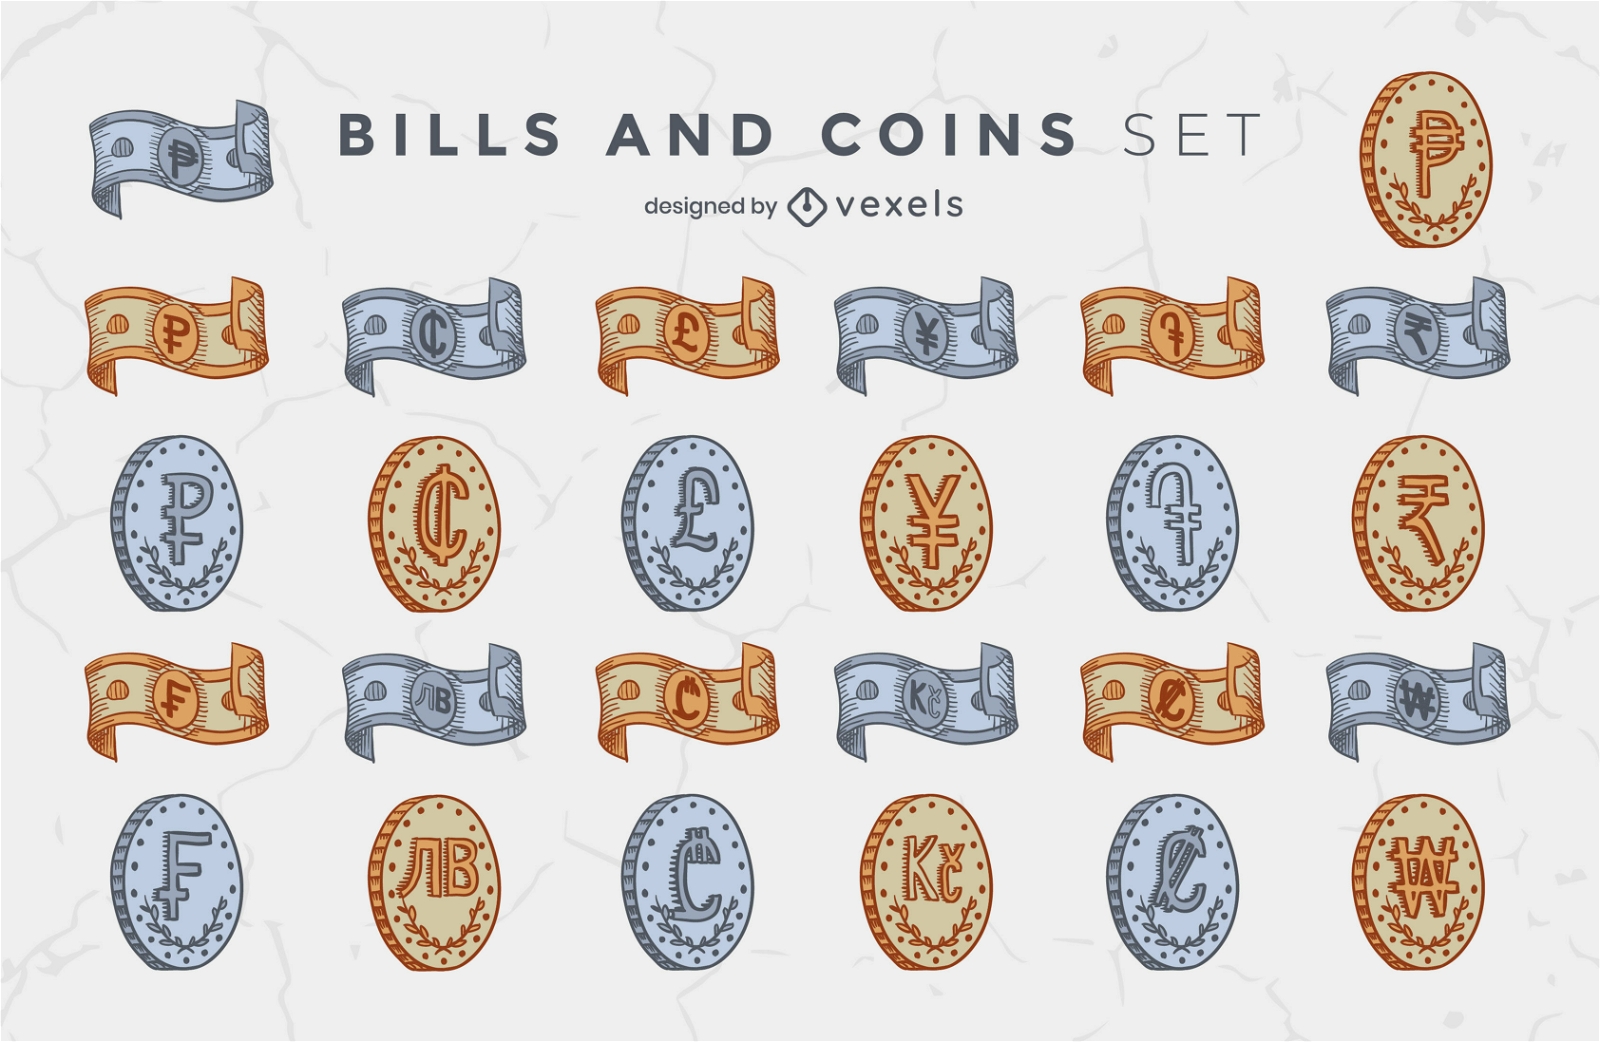 Cool bills and coins illustration set